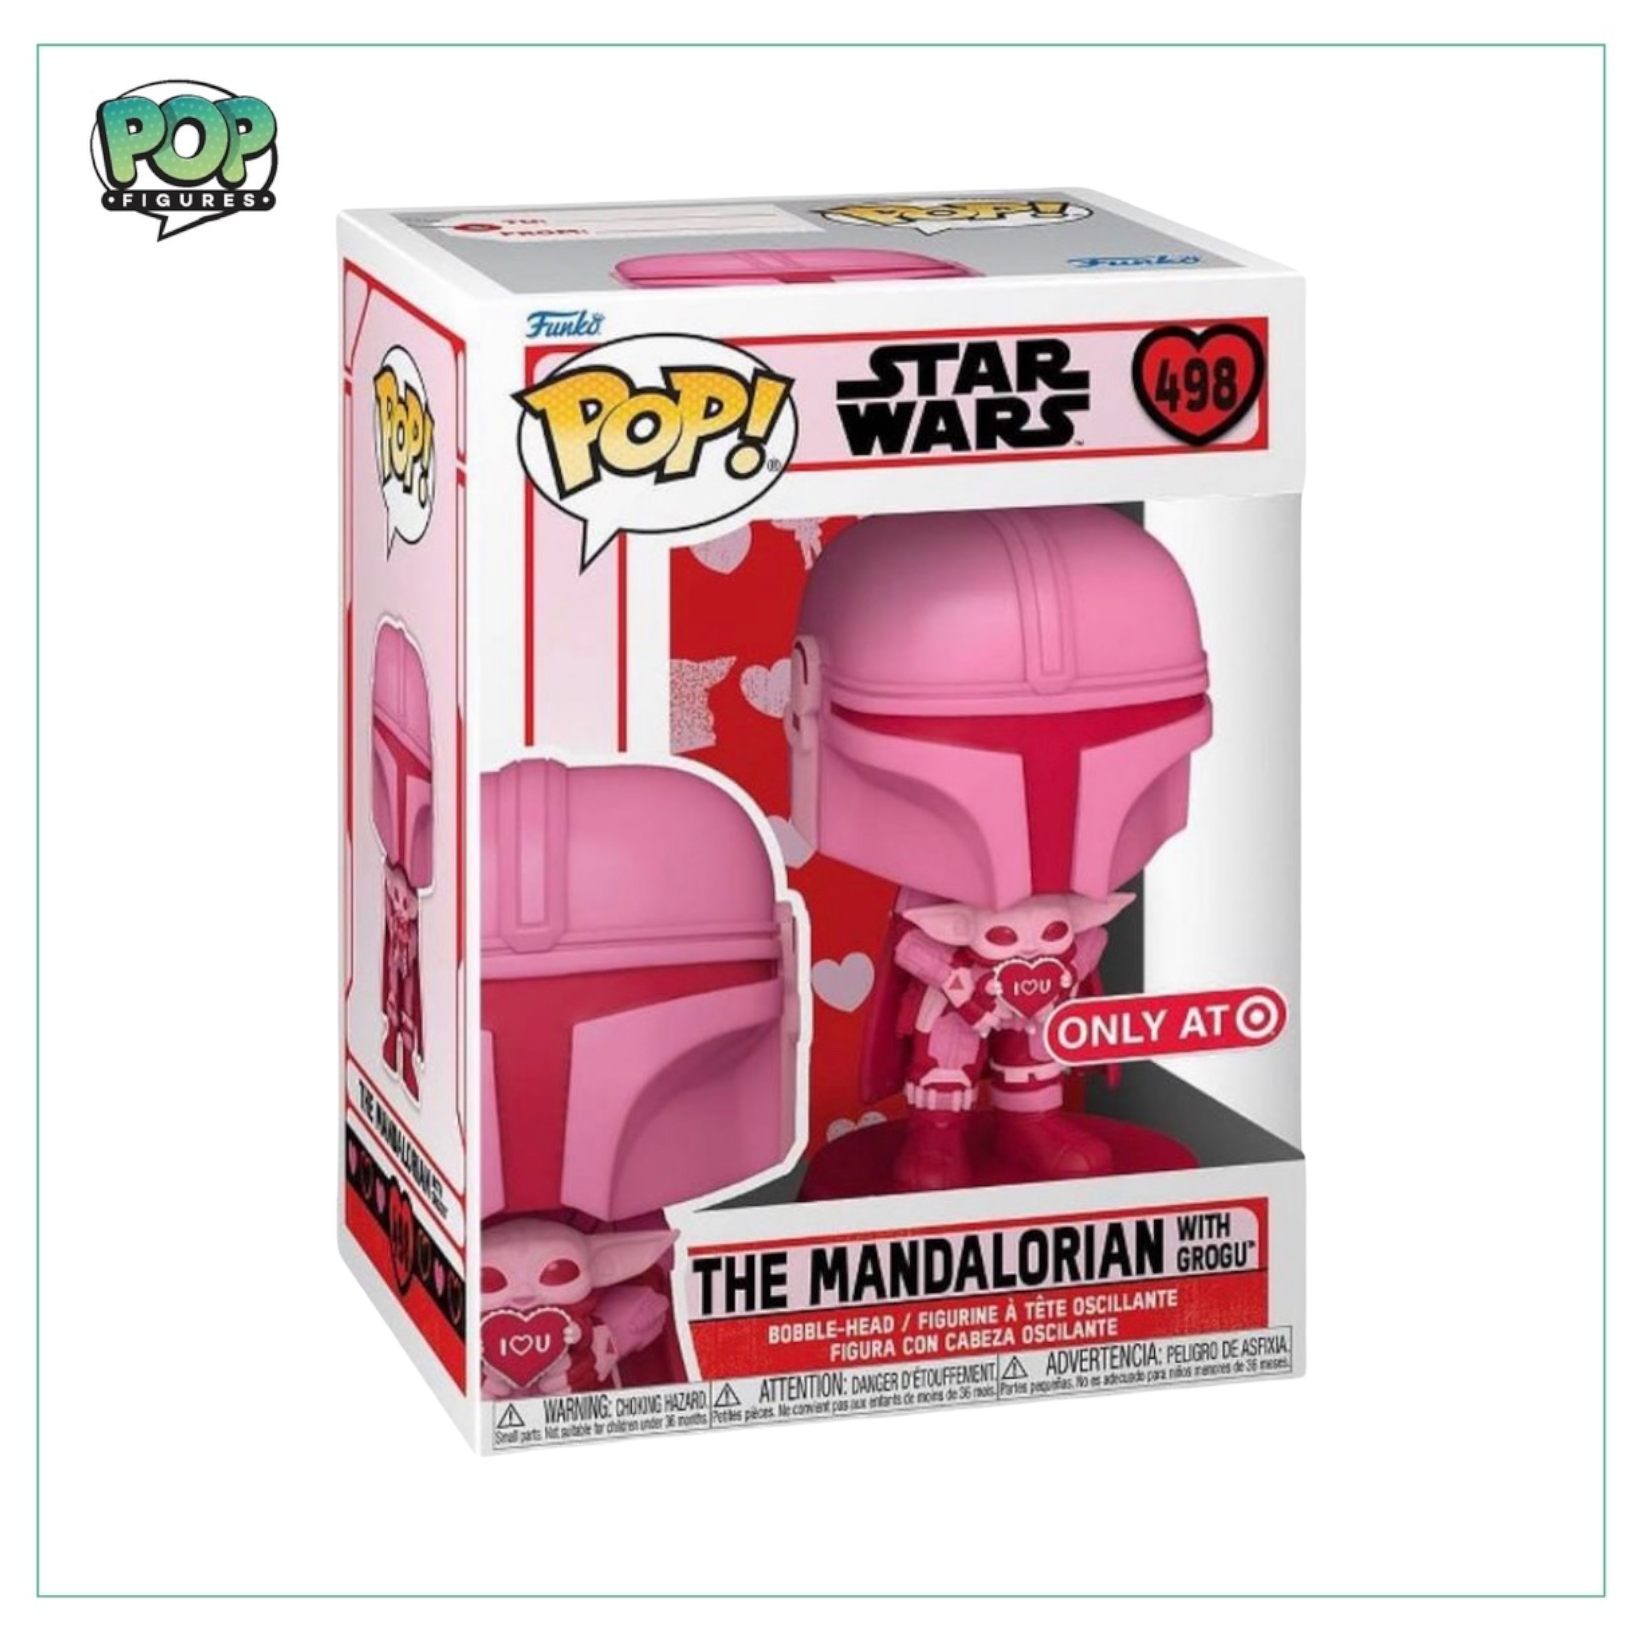 The Mandalorian W/ Grogu #498 Funko Pop! Star Wars - Target Exclusive